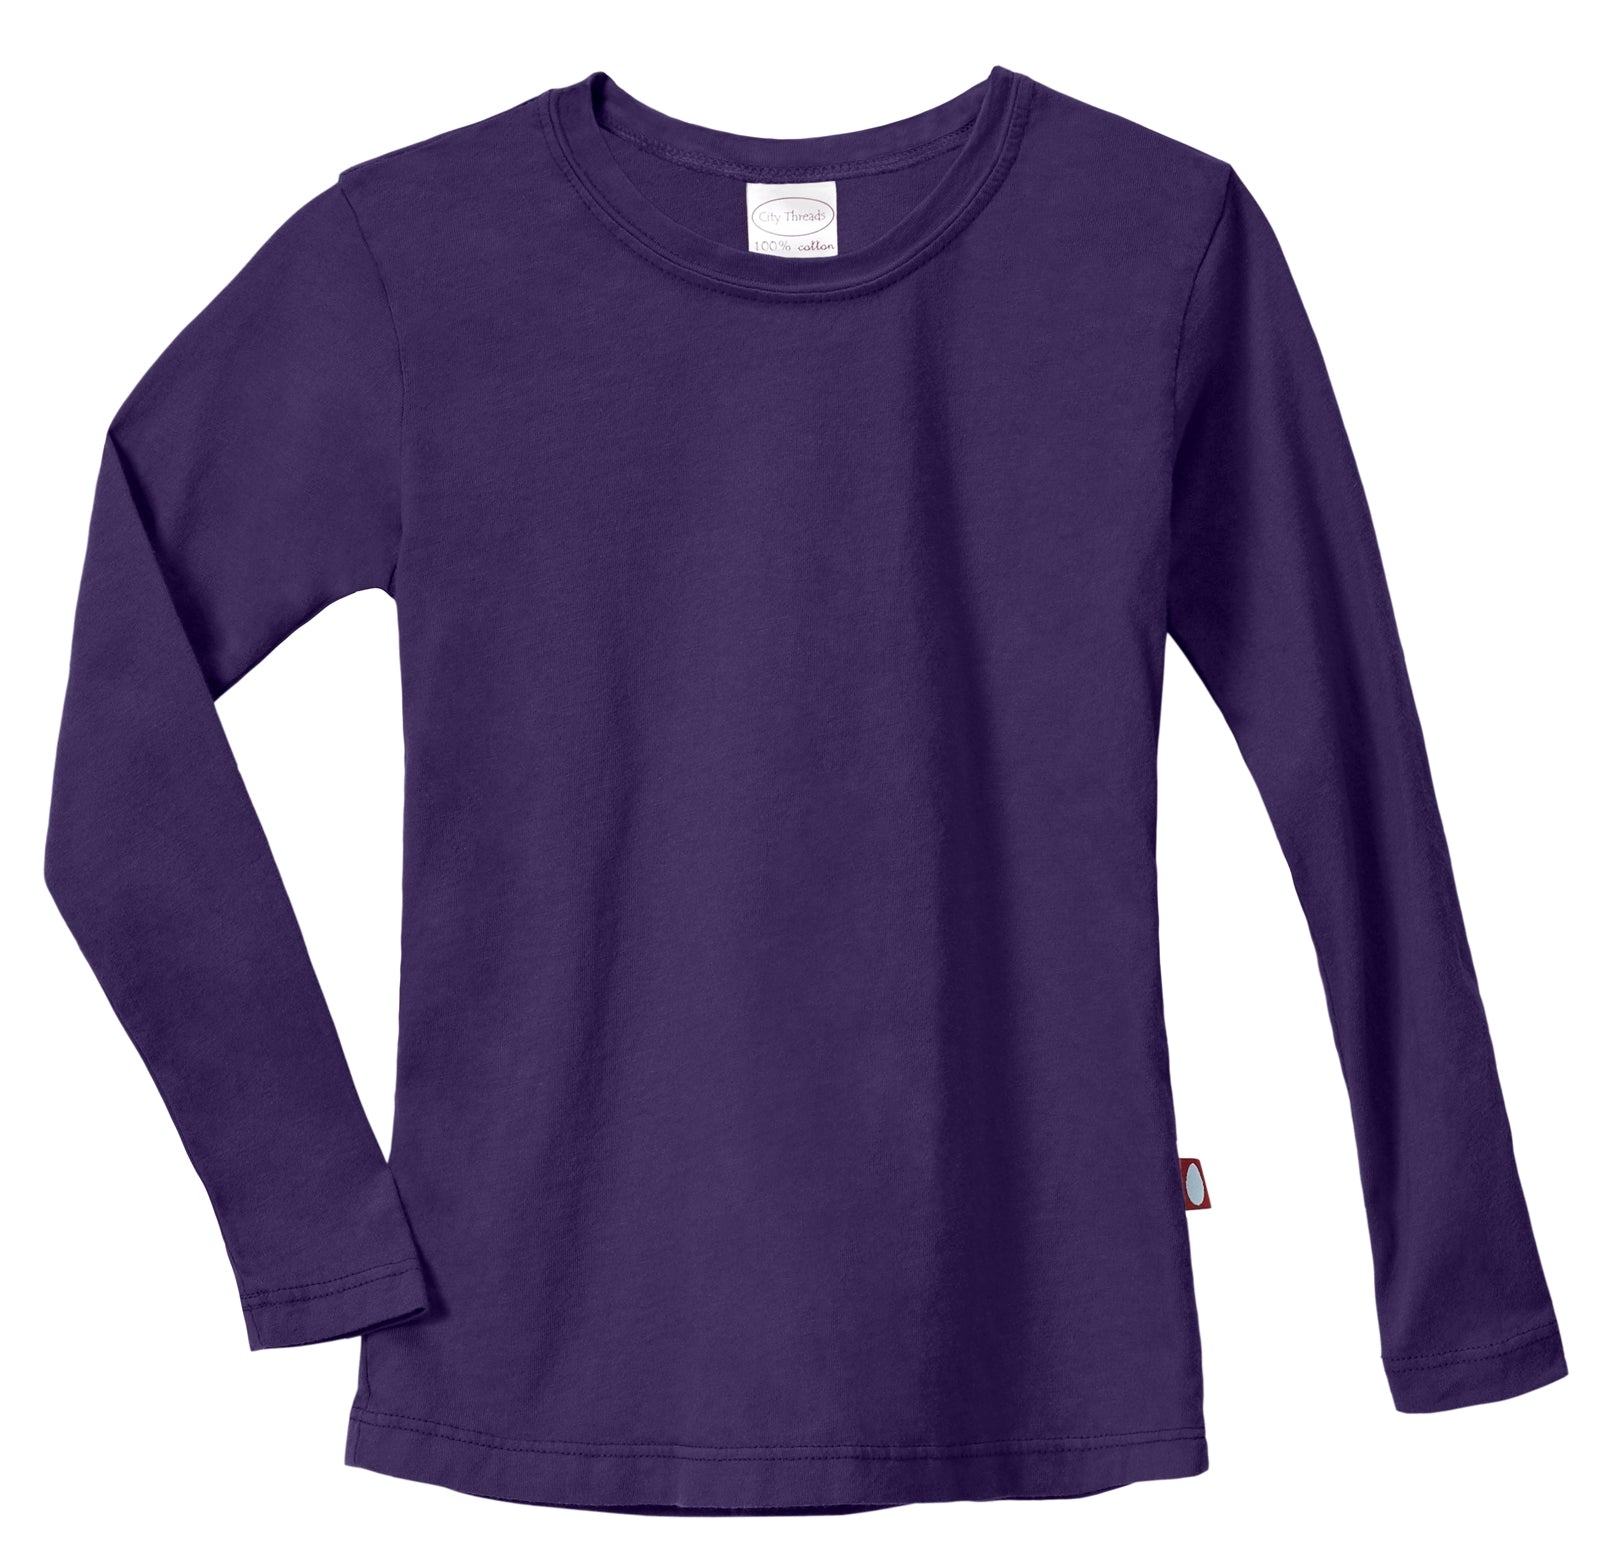 Plus Size Cotton Jersey Long Sleeve T-shirt, Light Purple